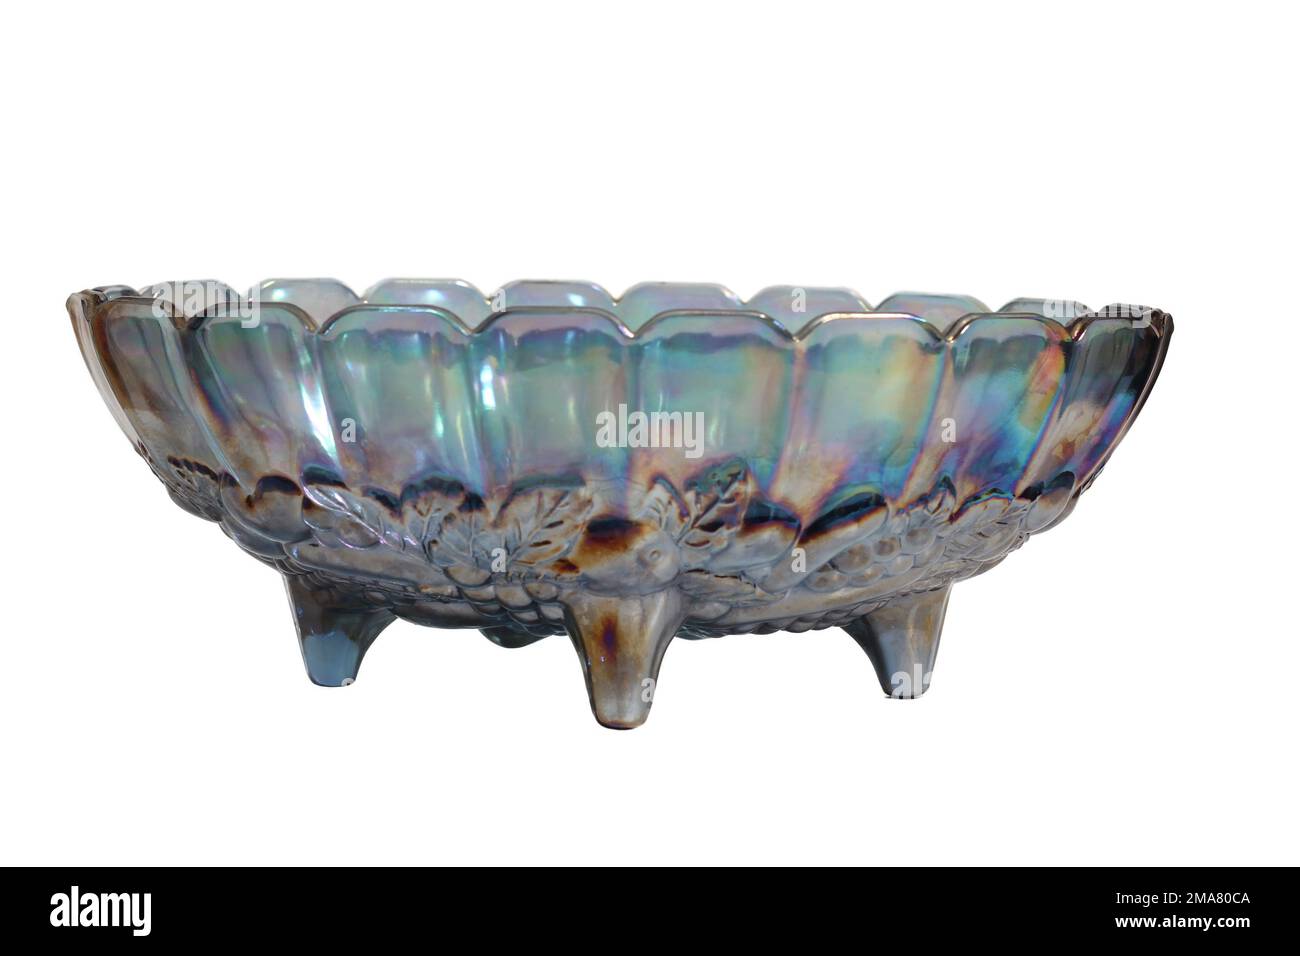 https://c8.alamy.com/comp/2MA80CA/vintage-blue-carnival-glass-fruit-bowl-isolated-on-white-2MA80CA.jpg